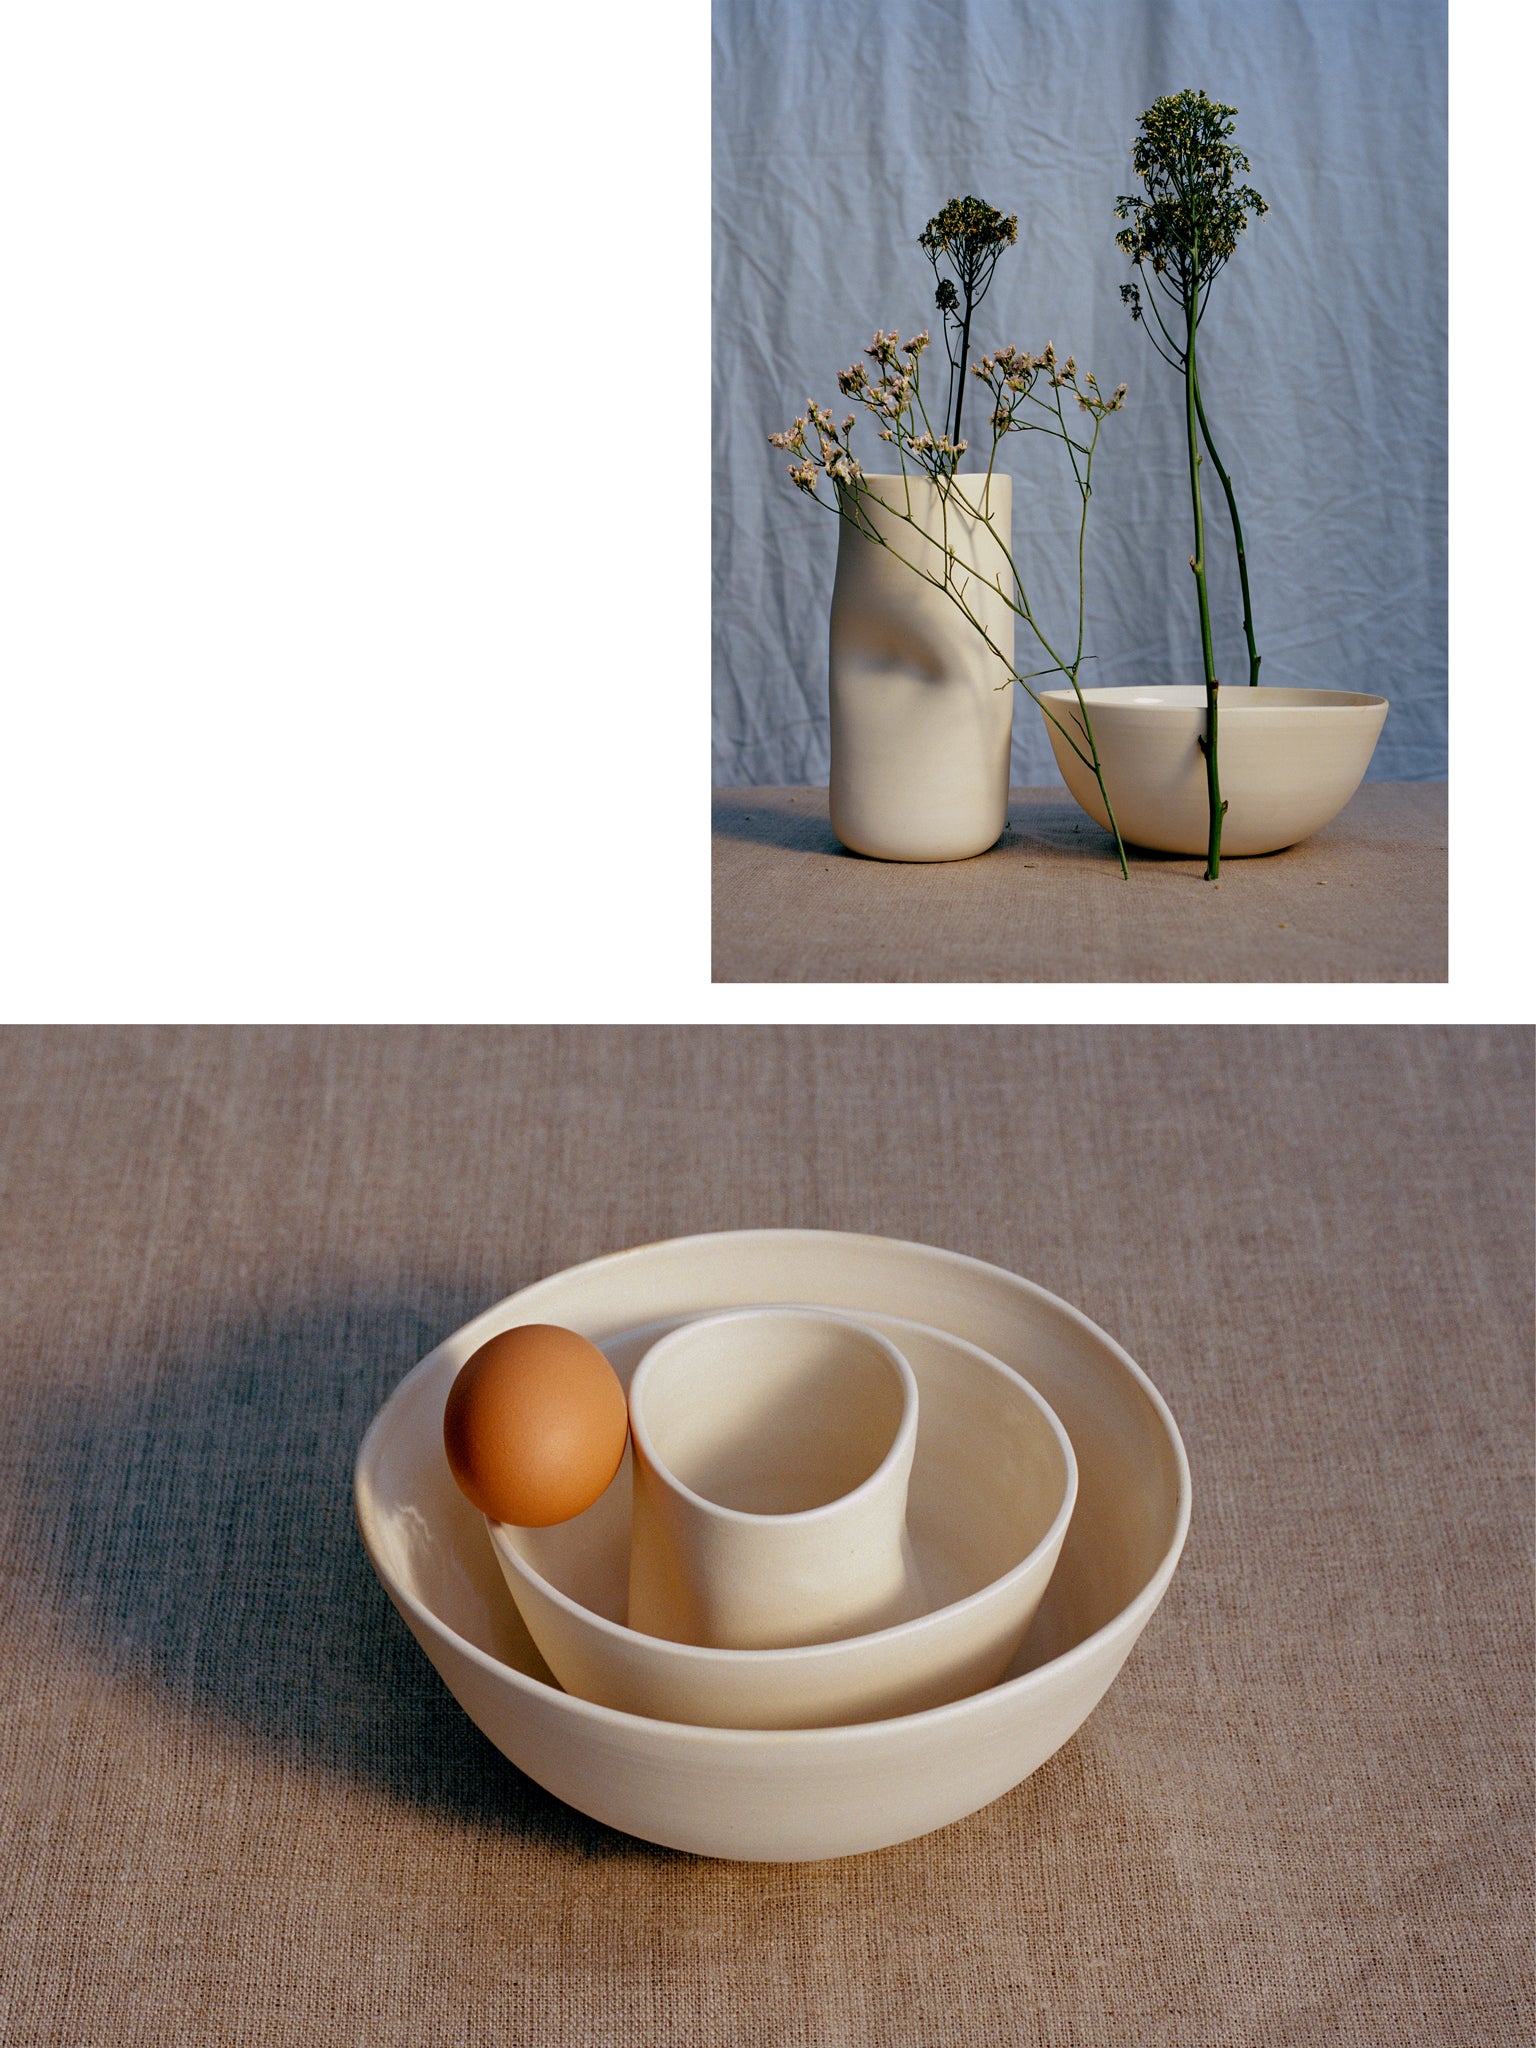 luxurious handmade ceramic still-life